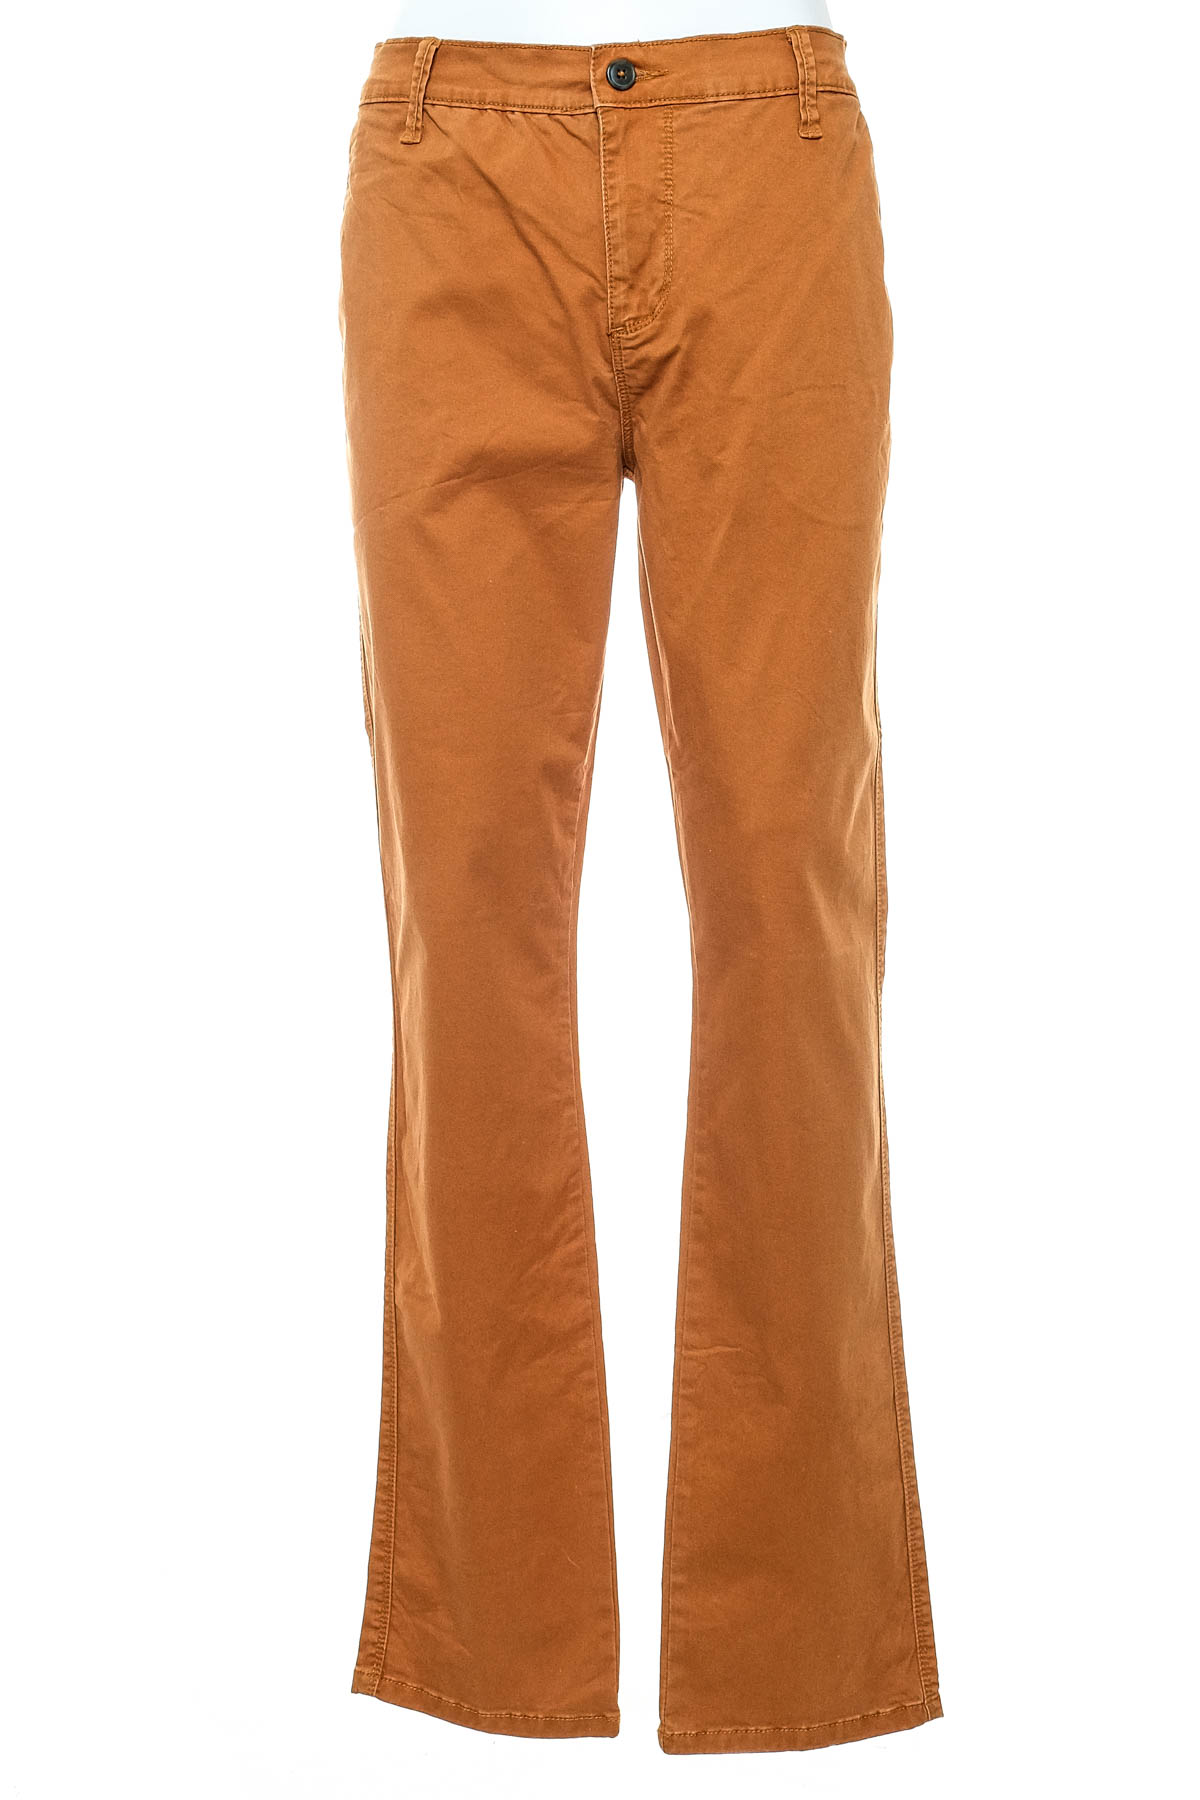 Pantalon pentru bărbați - KIABI - 0